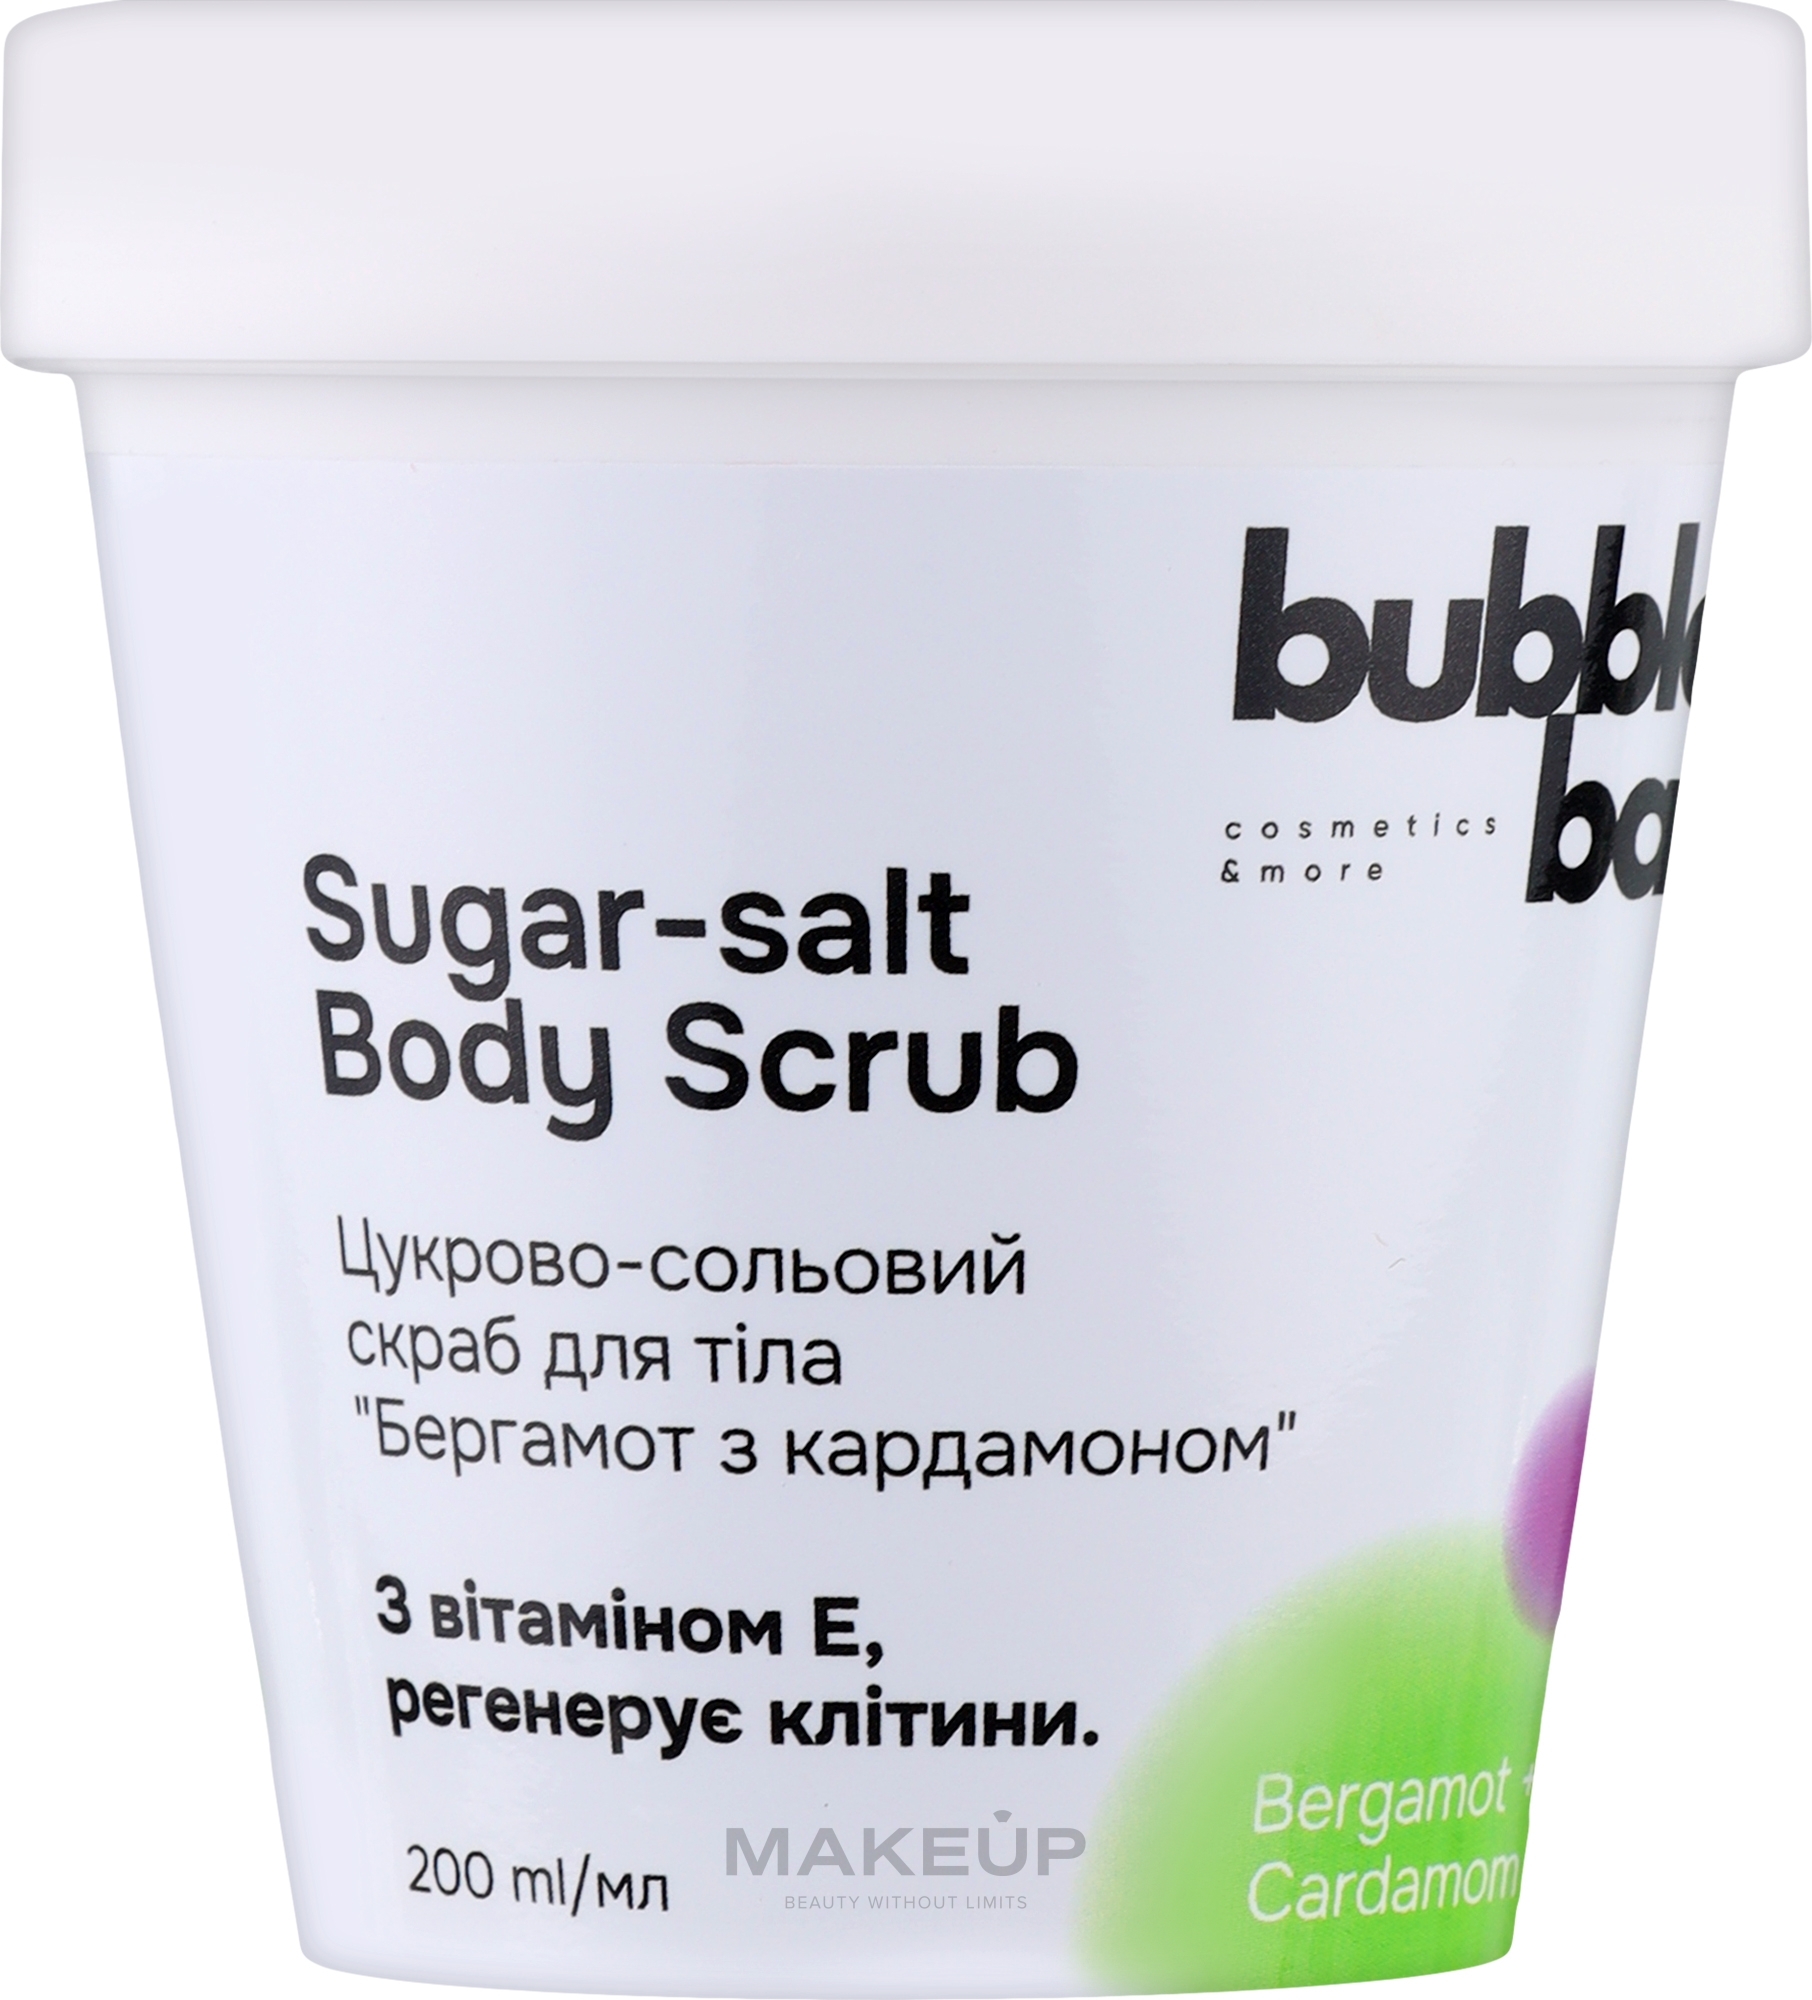 Цукрово-сольовий скраб для тіла "Бергамот із кардамоном" - Bubble Bar Sugar-Salt Body Scrub — фото 200ml